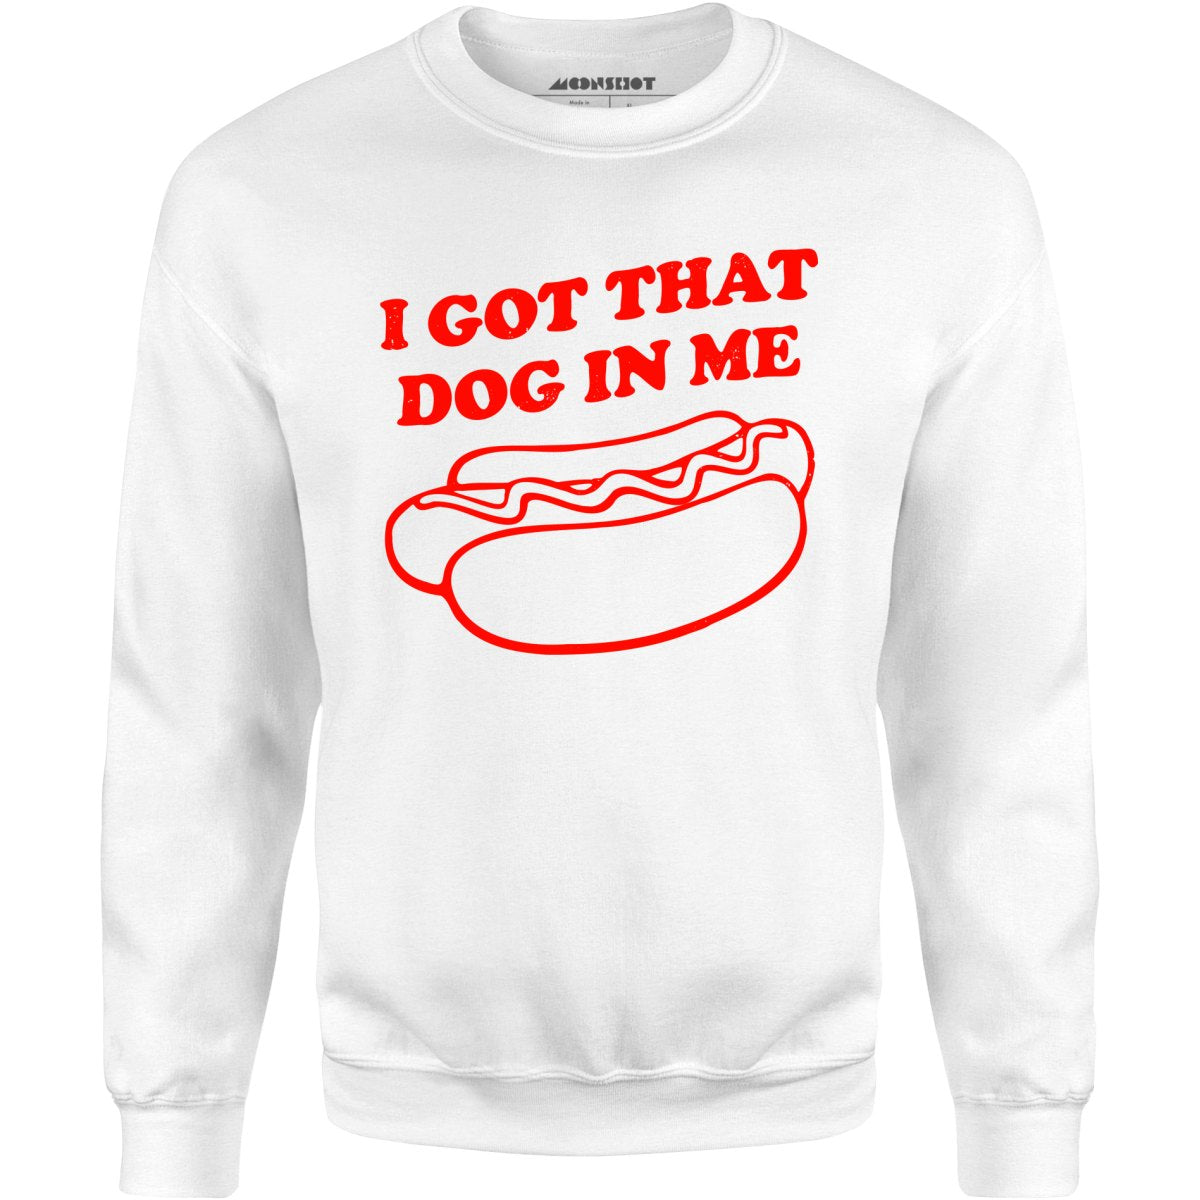 I Got That Dog in Me - Unisex Sweatshirt